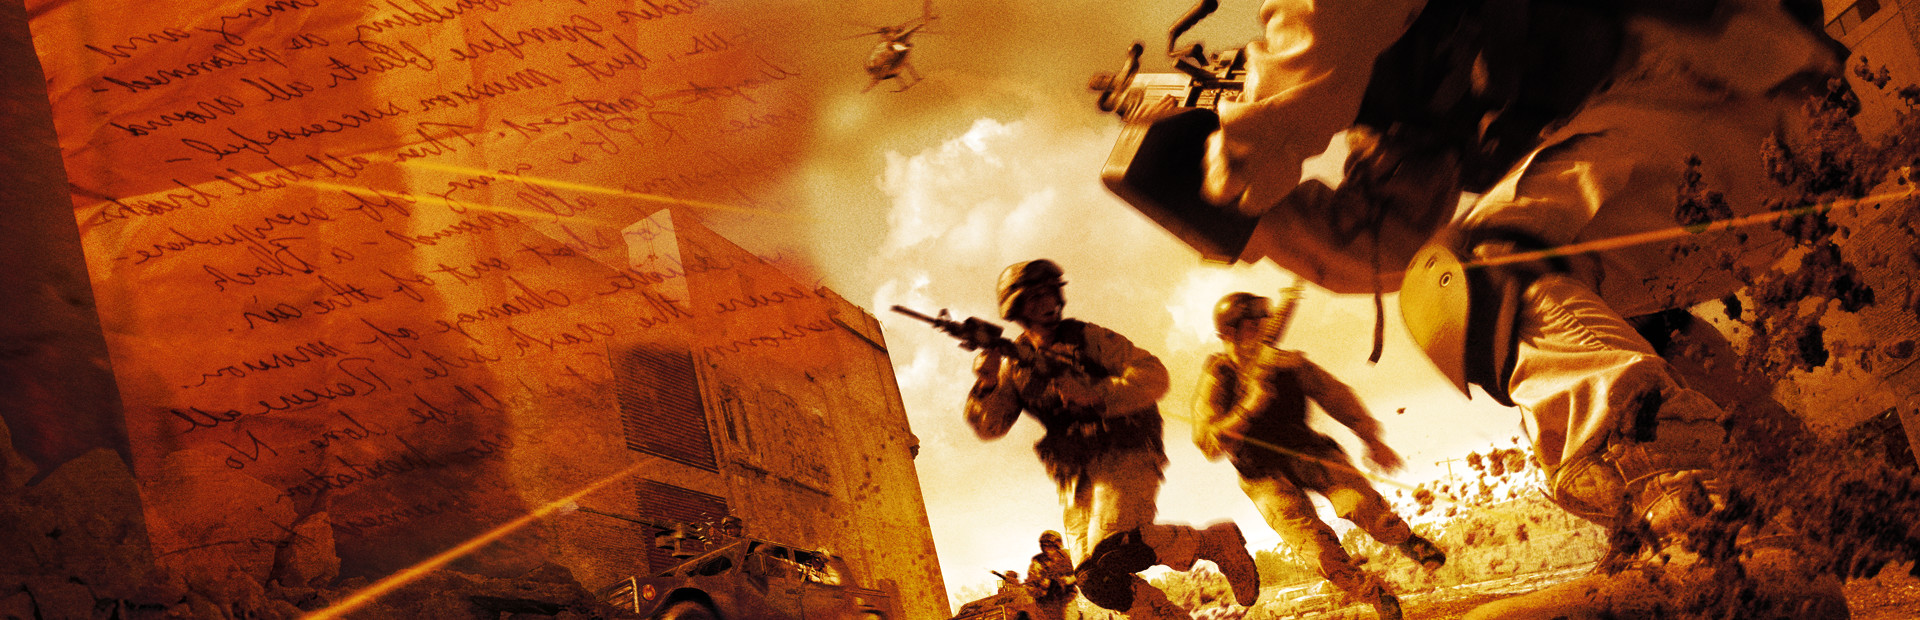 Delta Force: Black Hawk Down cover image